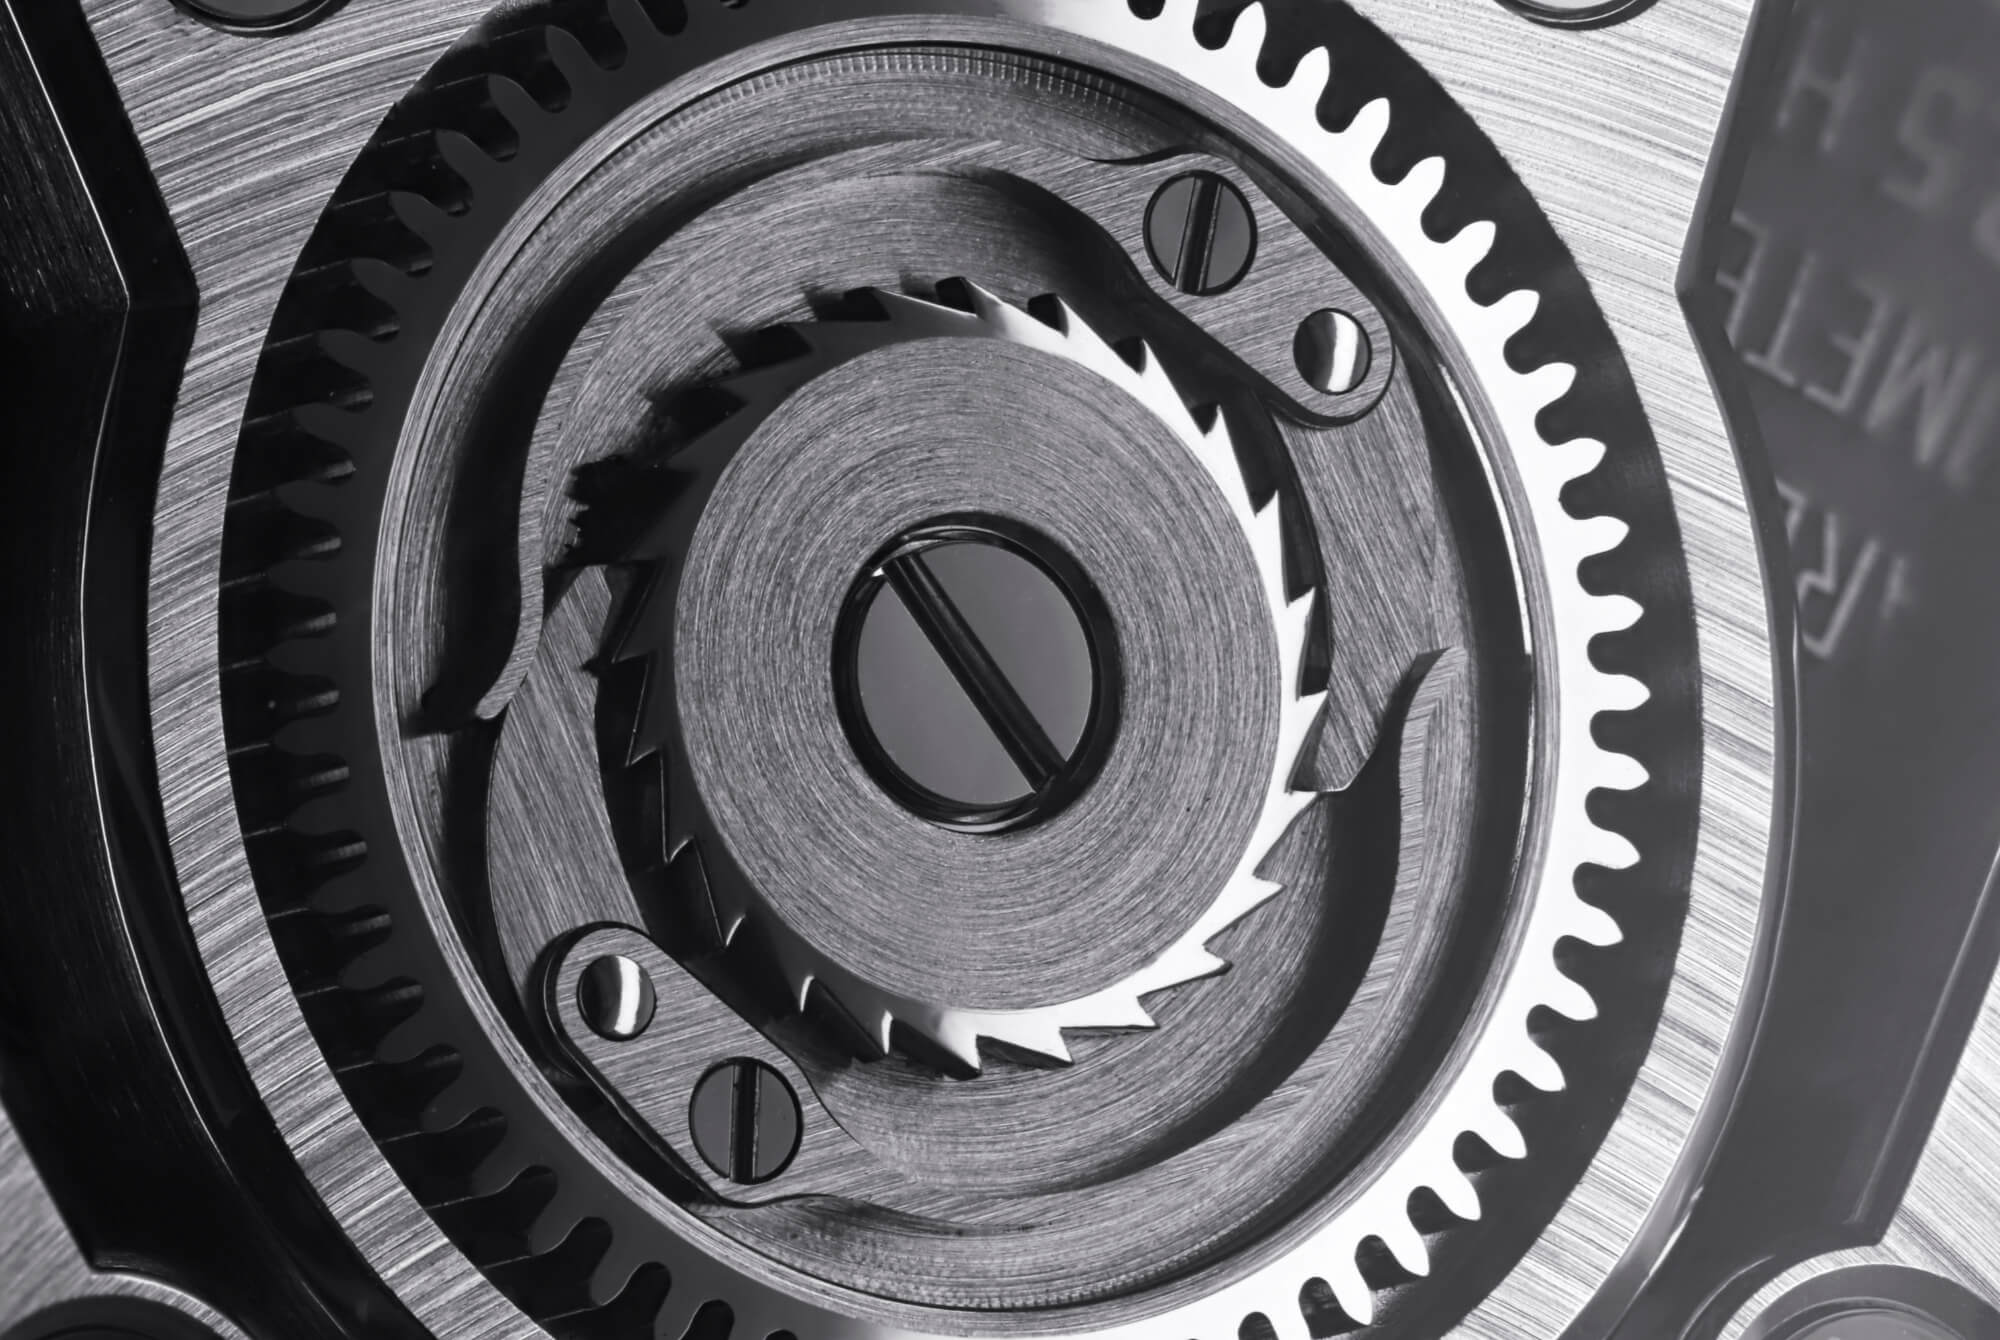 Armin Strom представляет часы Mirrored Force Resonance Manufacture Edition Blue Watch